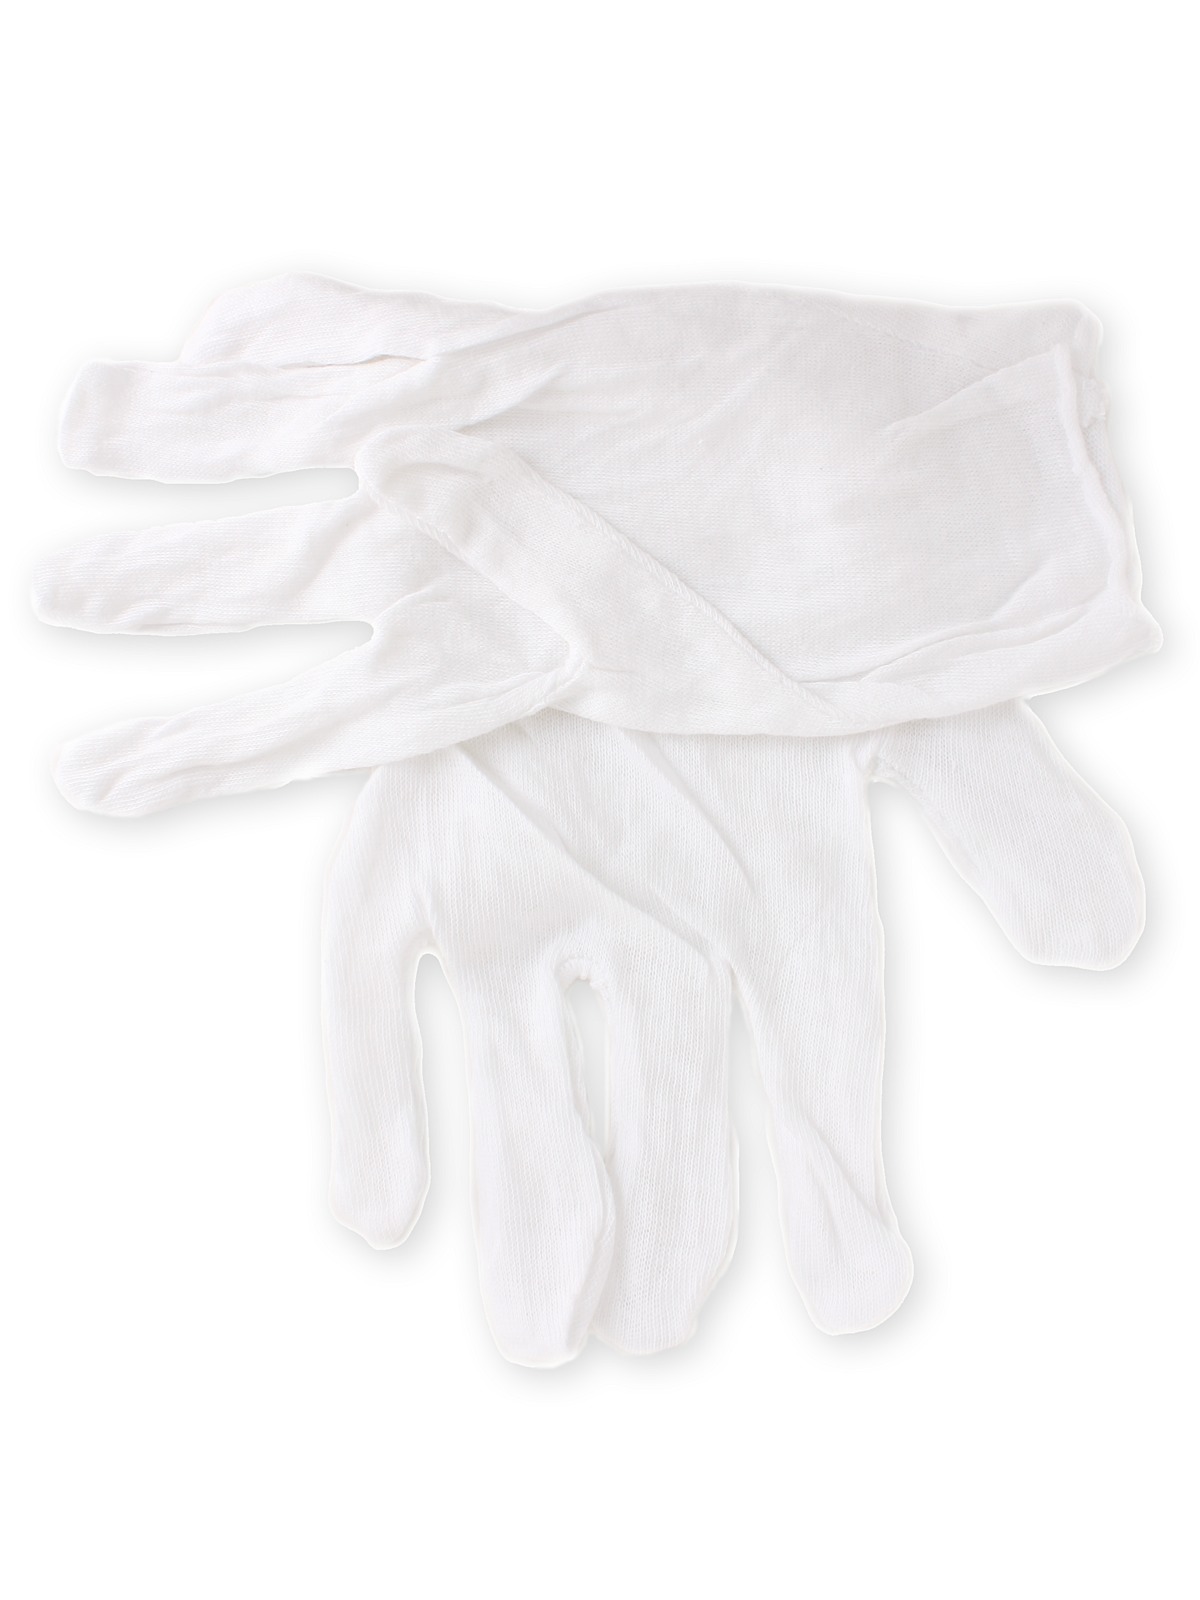 KALT - White Lintless Cotton Gloves